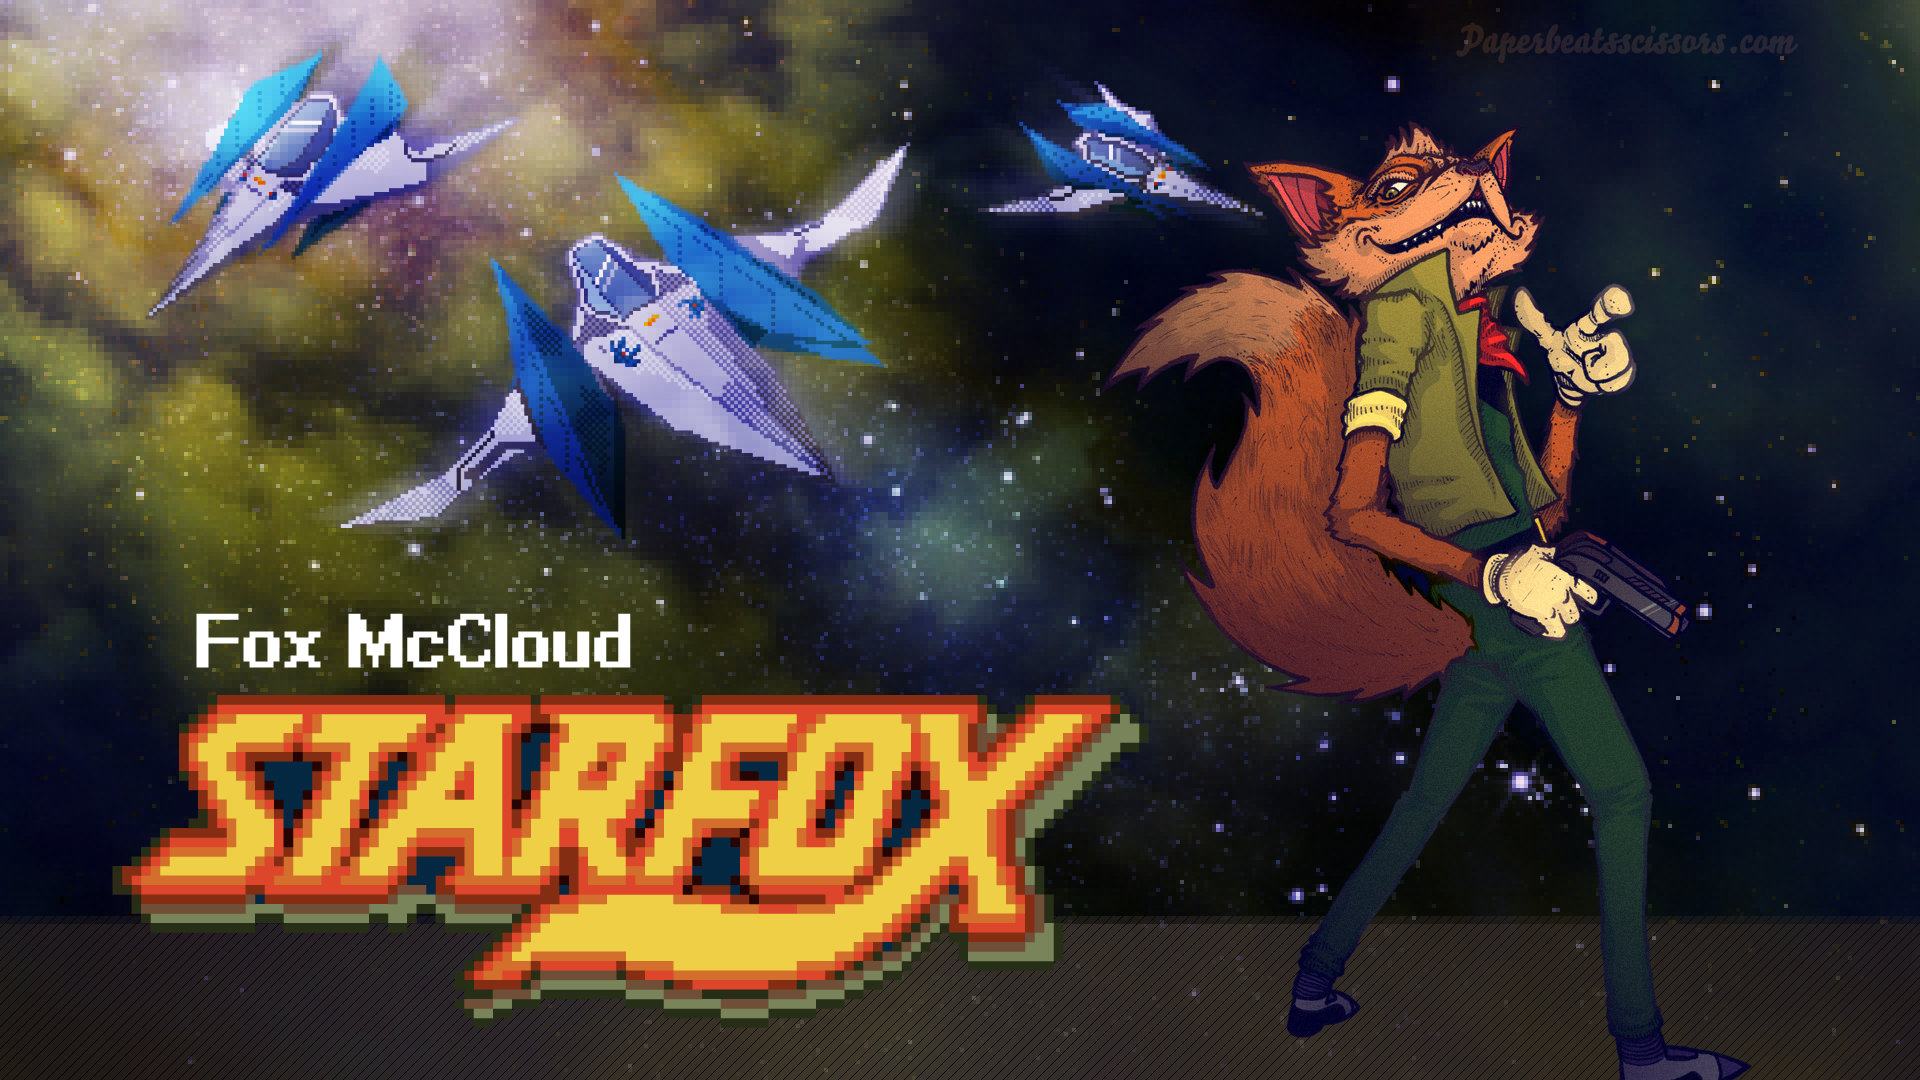 Download full hd Star Fox computer wallpaper ID:70111 for free